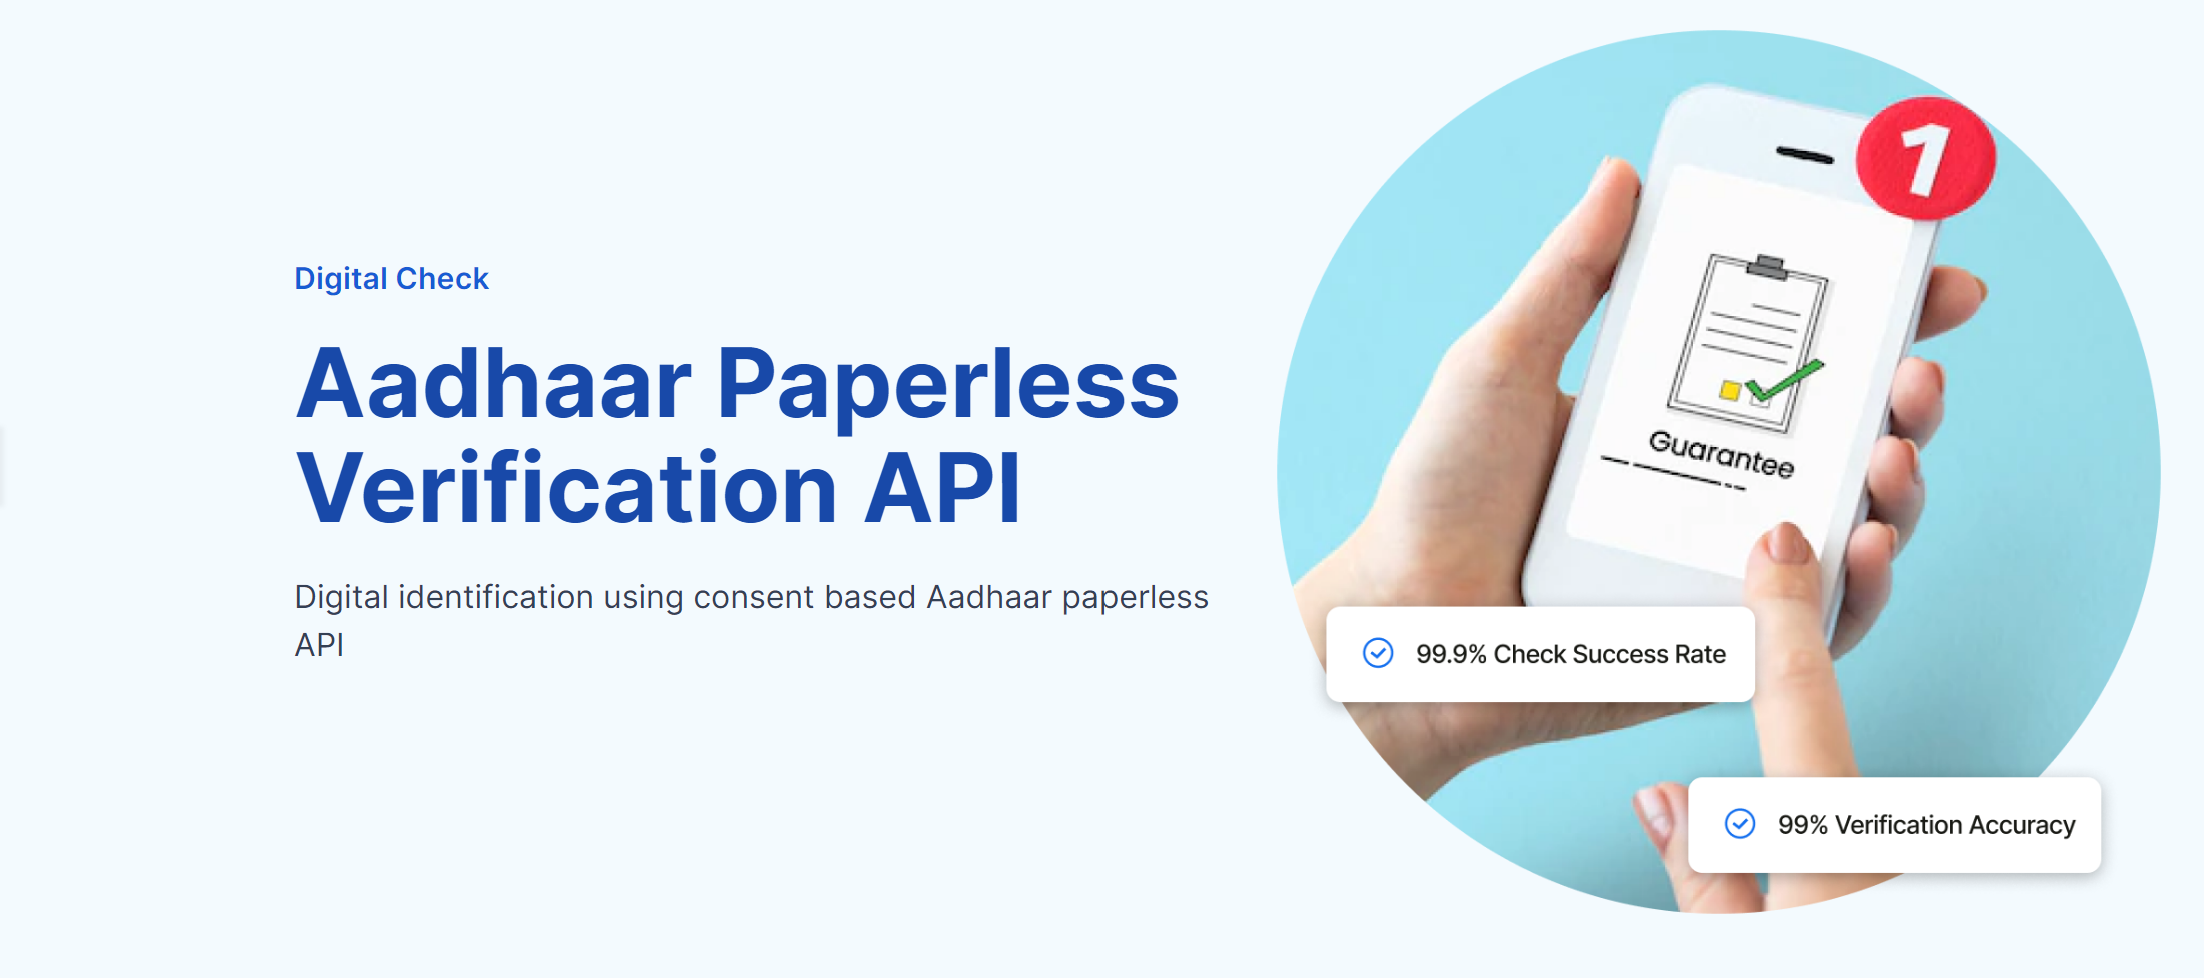 Aadhaar paperless verification